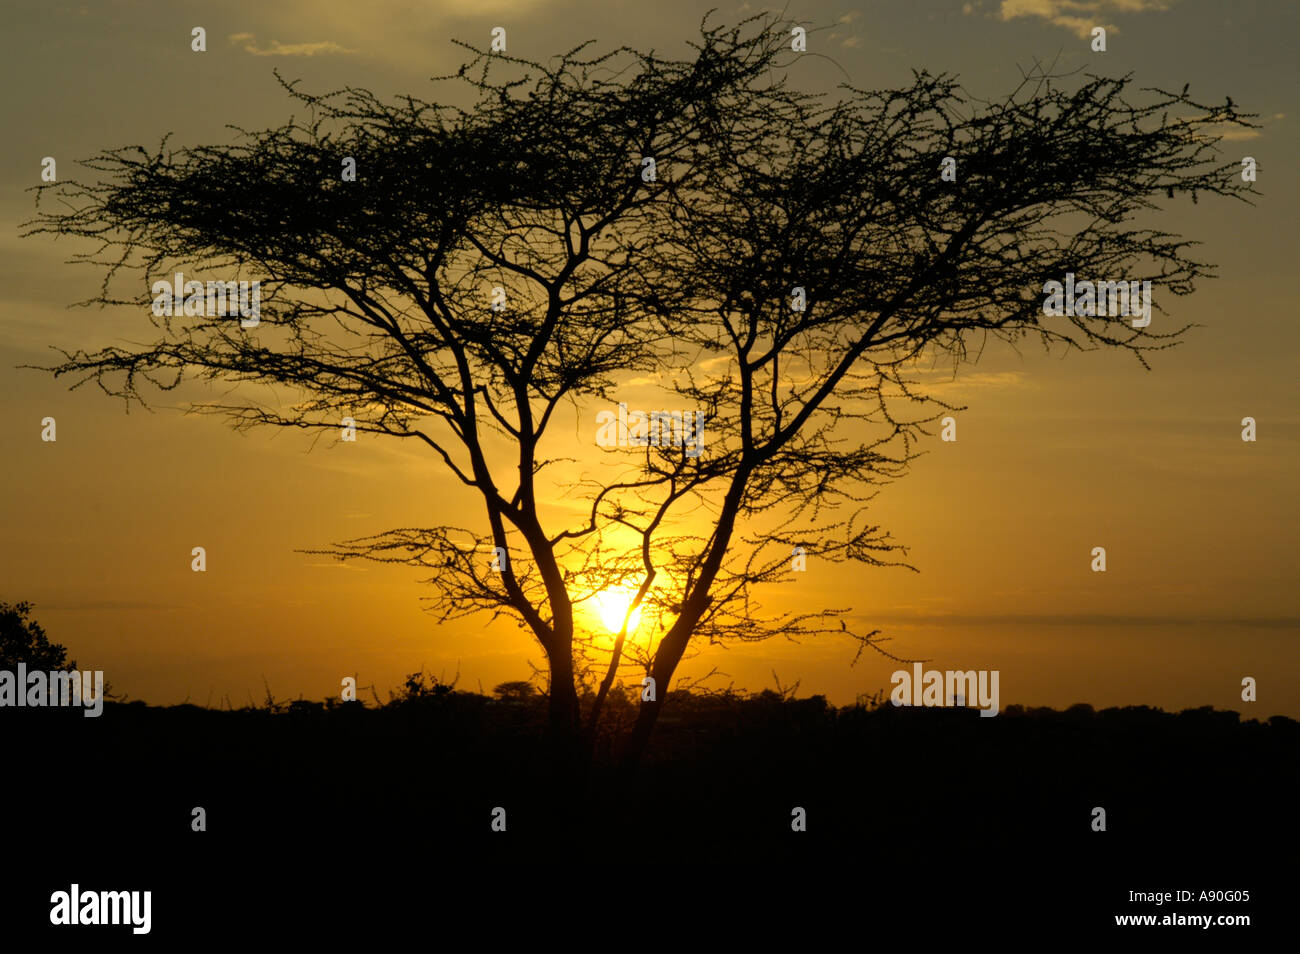 Orange sun and sky at sundown behind an acatia tree in the savannnah Turmi Ethiopia Stock Photo